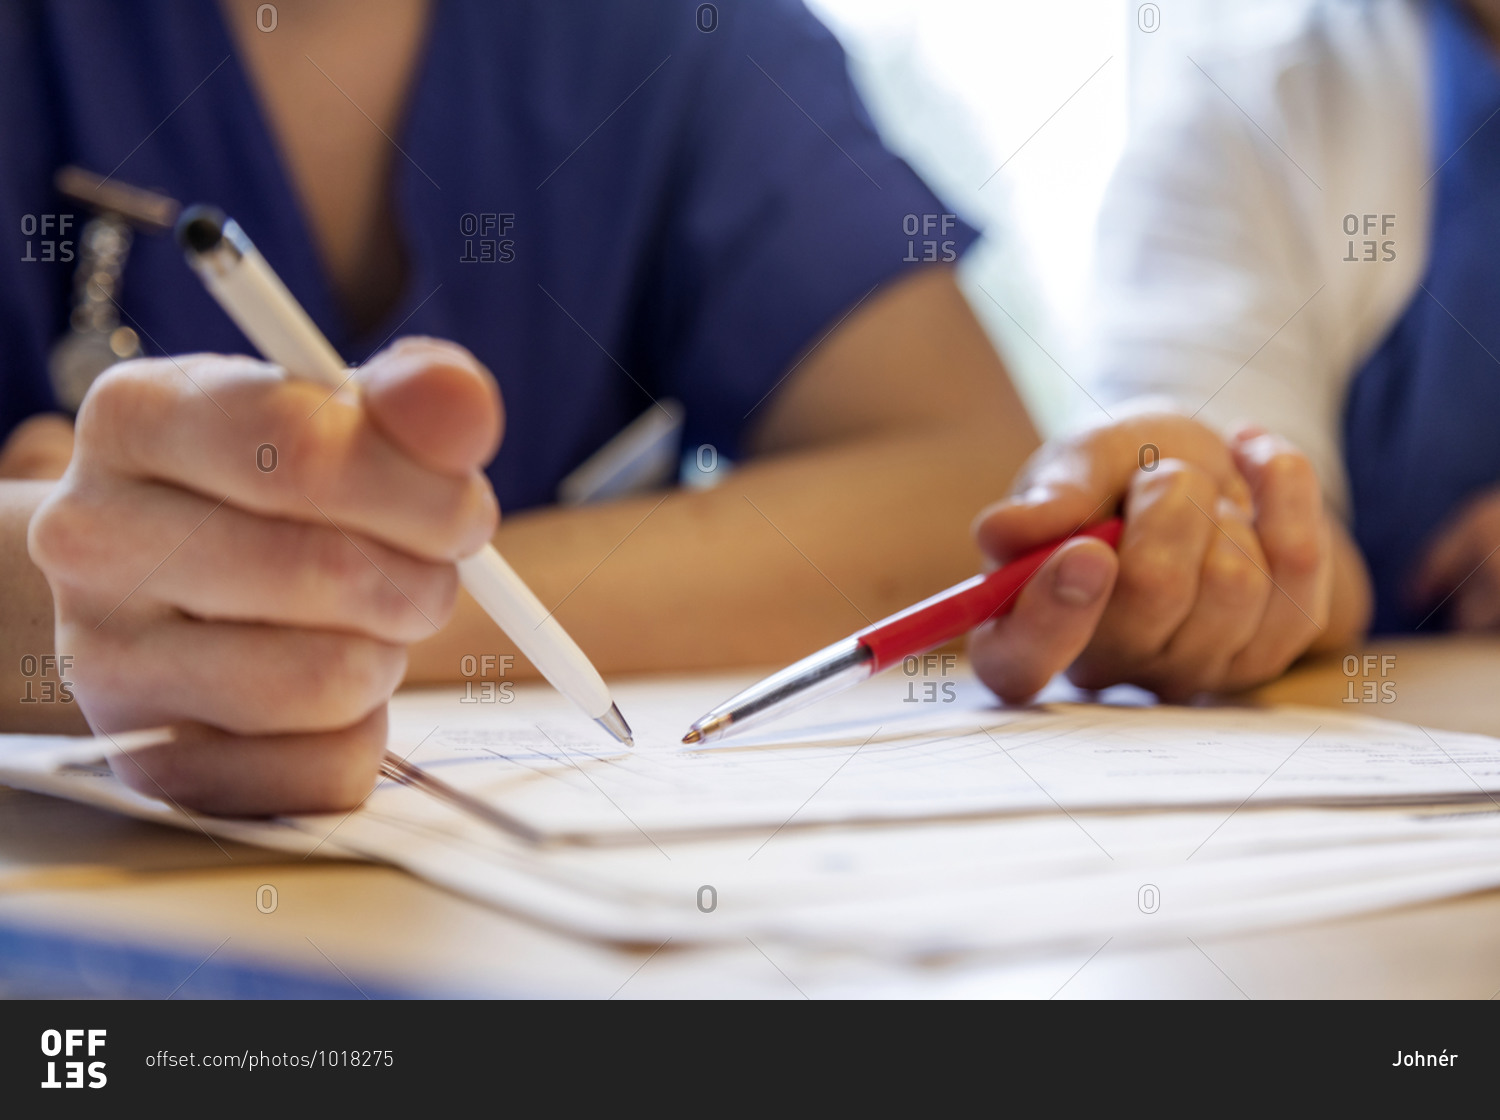 Nurses hands checking medical record